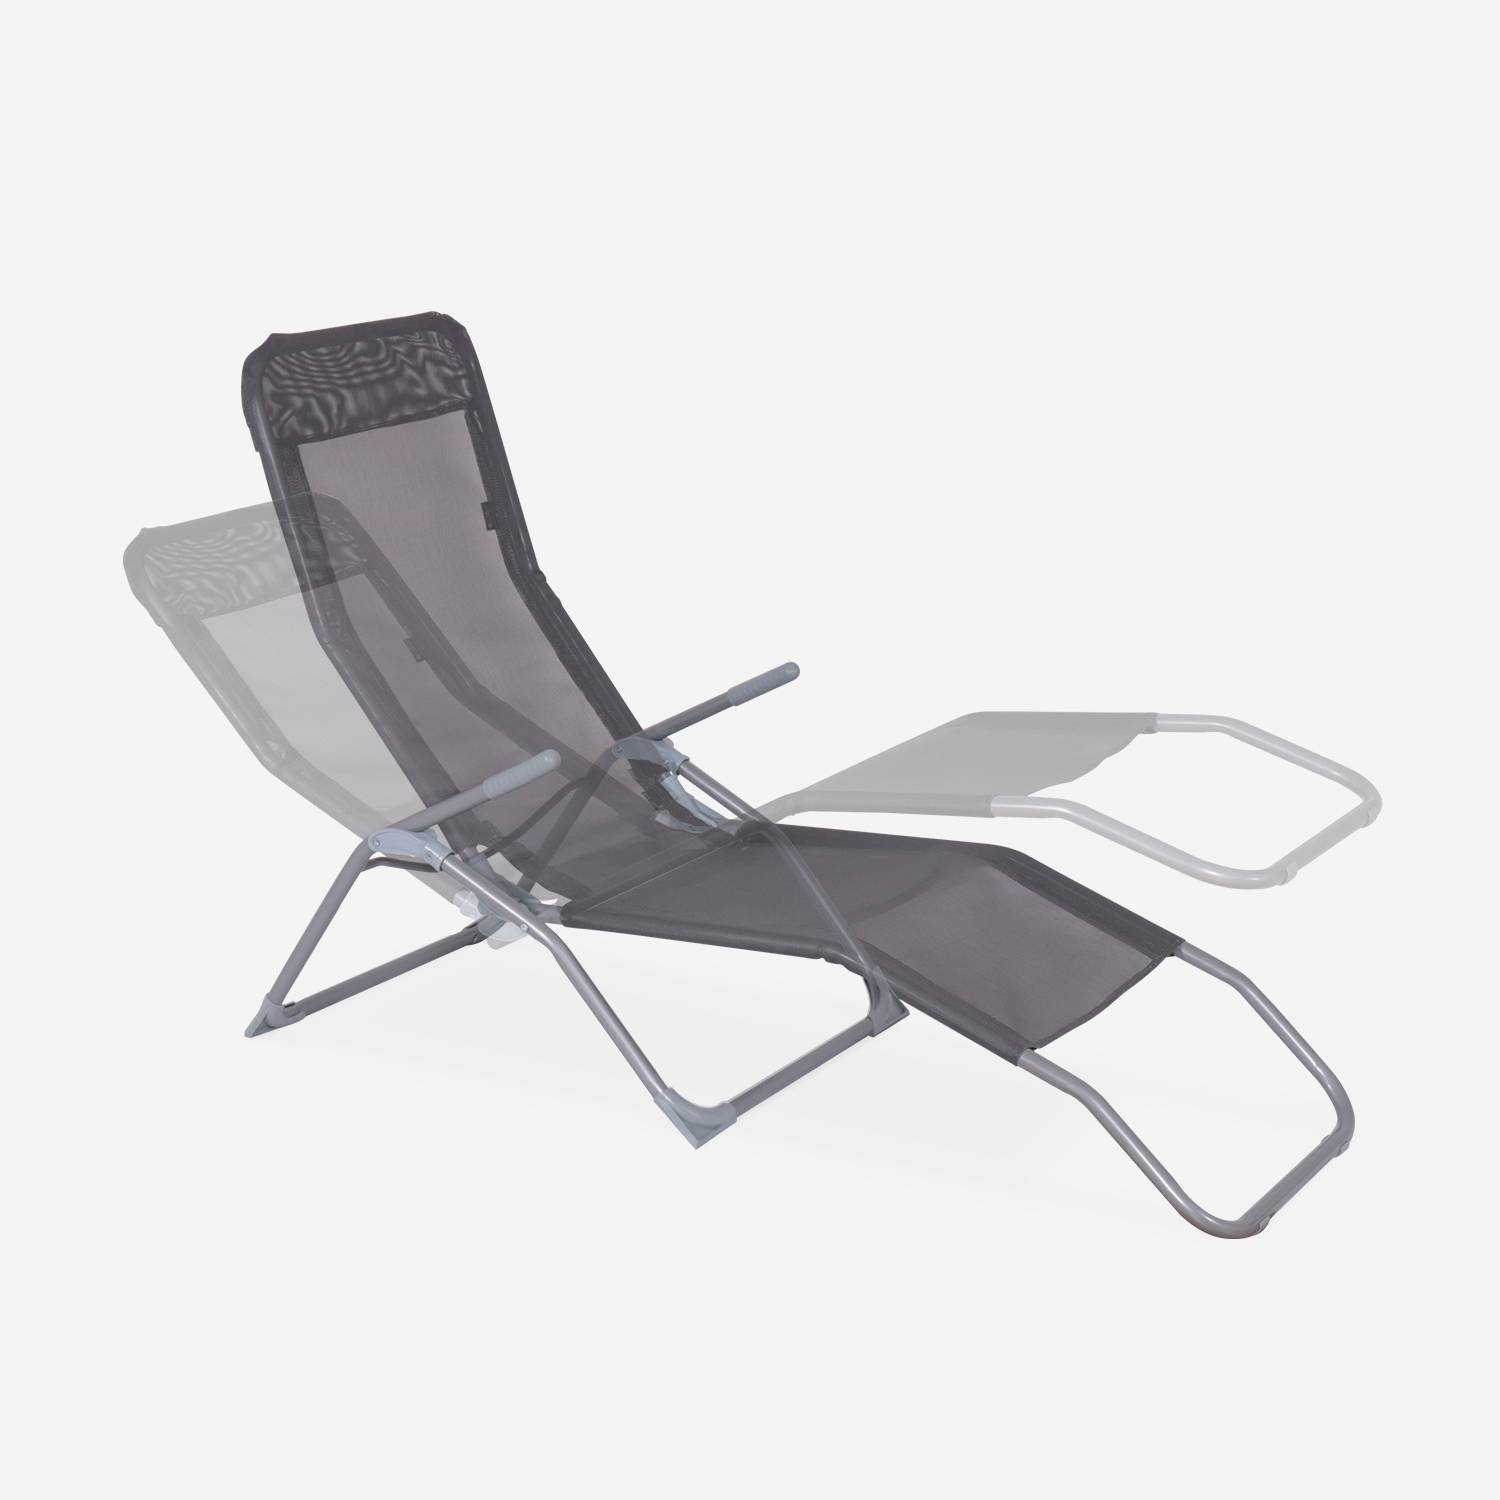 Set van 2 opvouwbare ligstoelen - Levito Anthraciet - Ligstoelen van textileen, 2 posities, opvouwbare ligstoelen Photo3